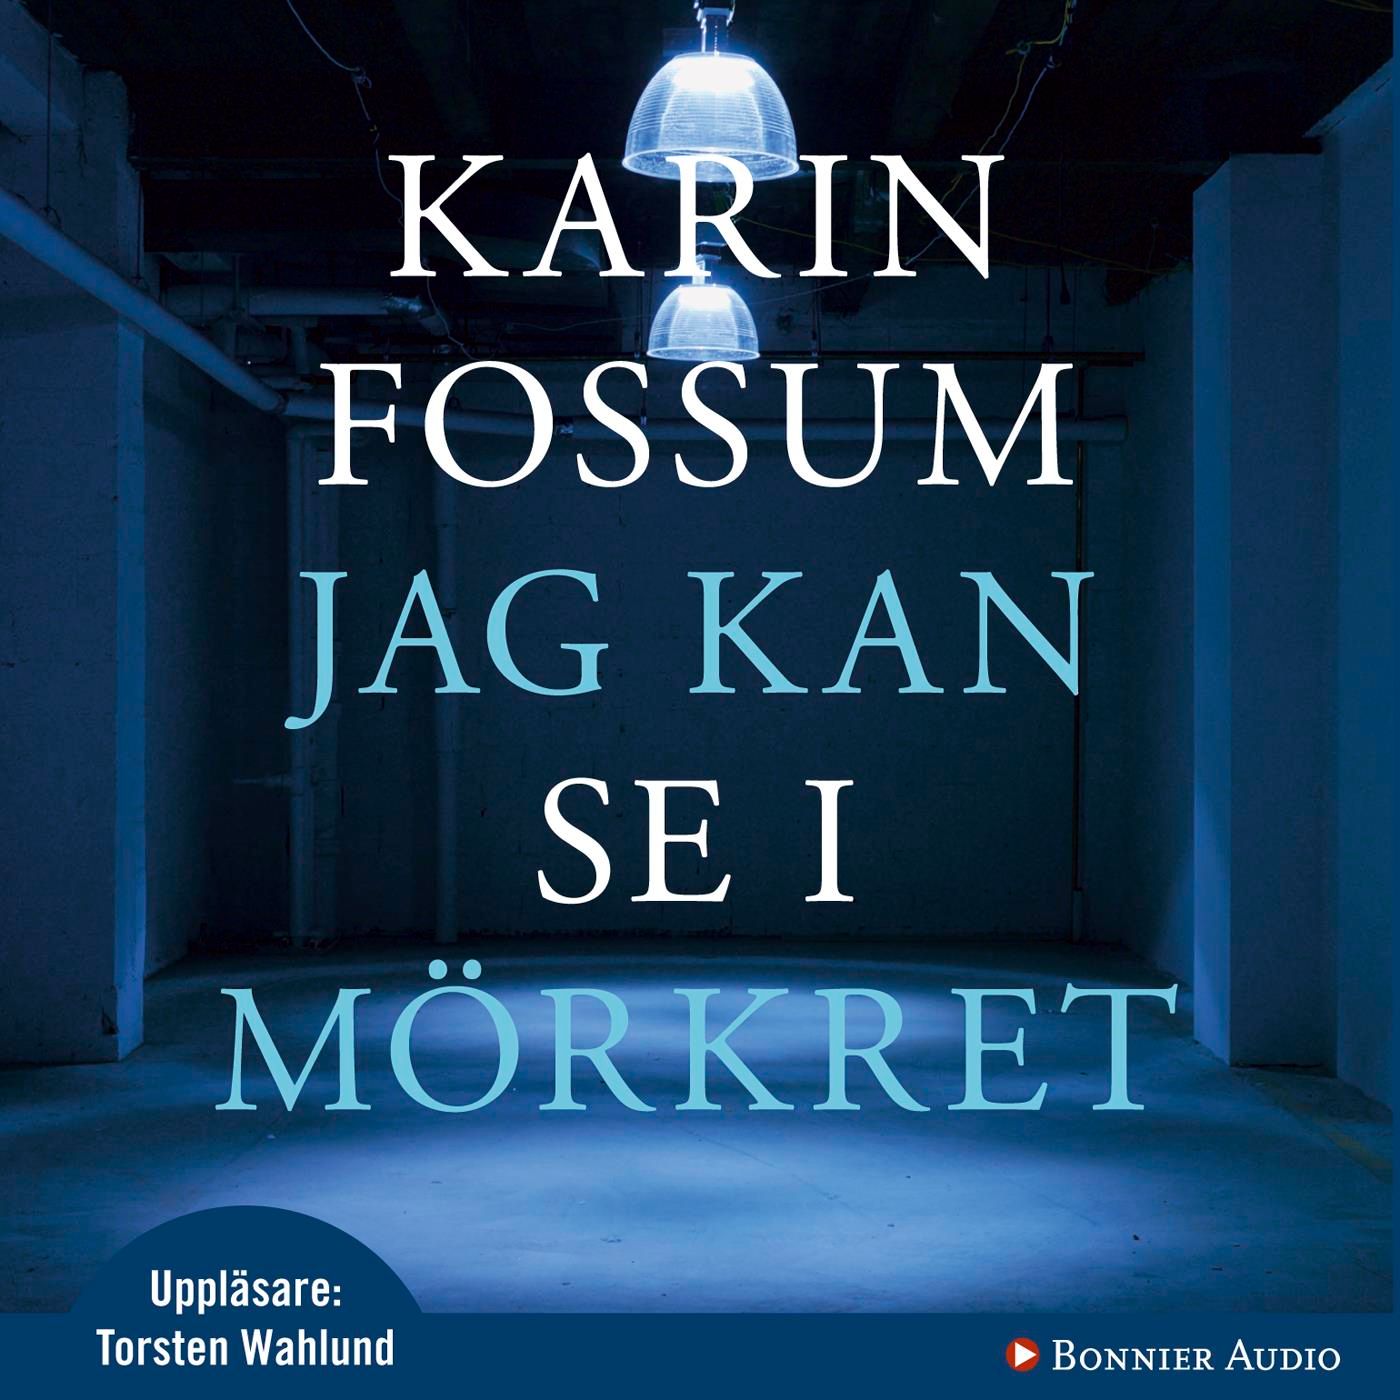 Jag kan se i mörkret, audiobook by Karin Fossum